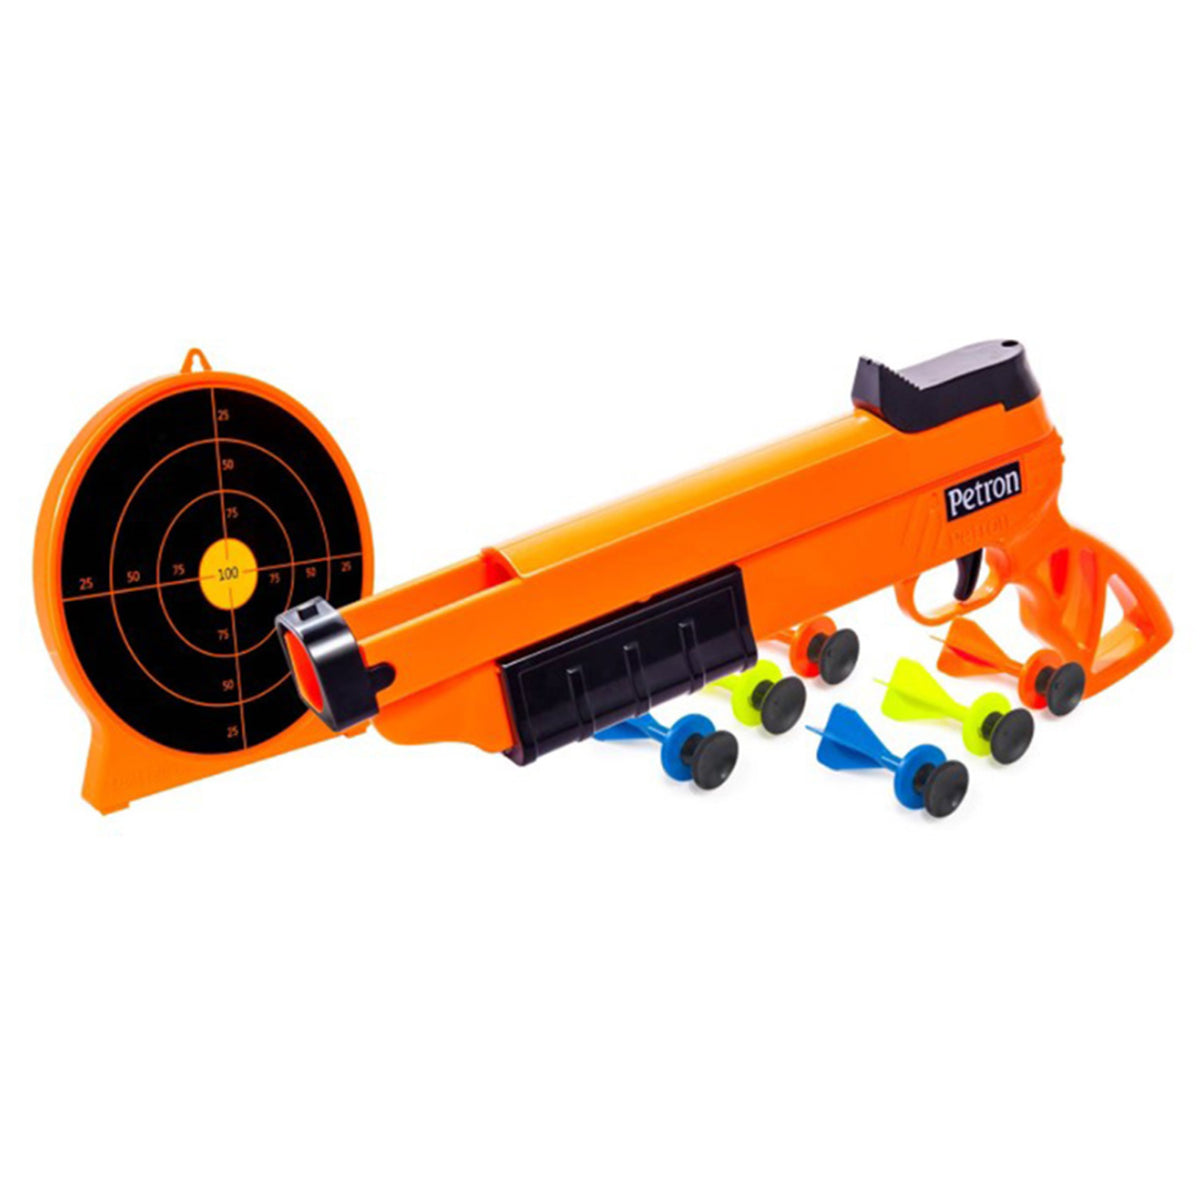 Sureshot Pistol/Target/Darts Set